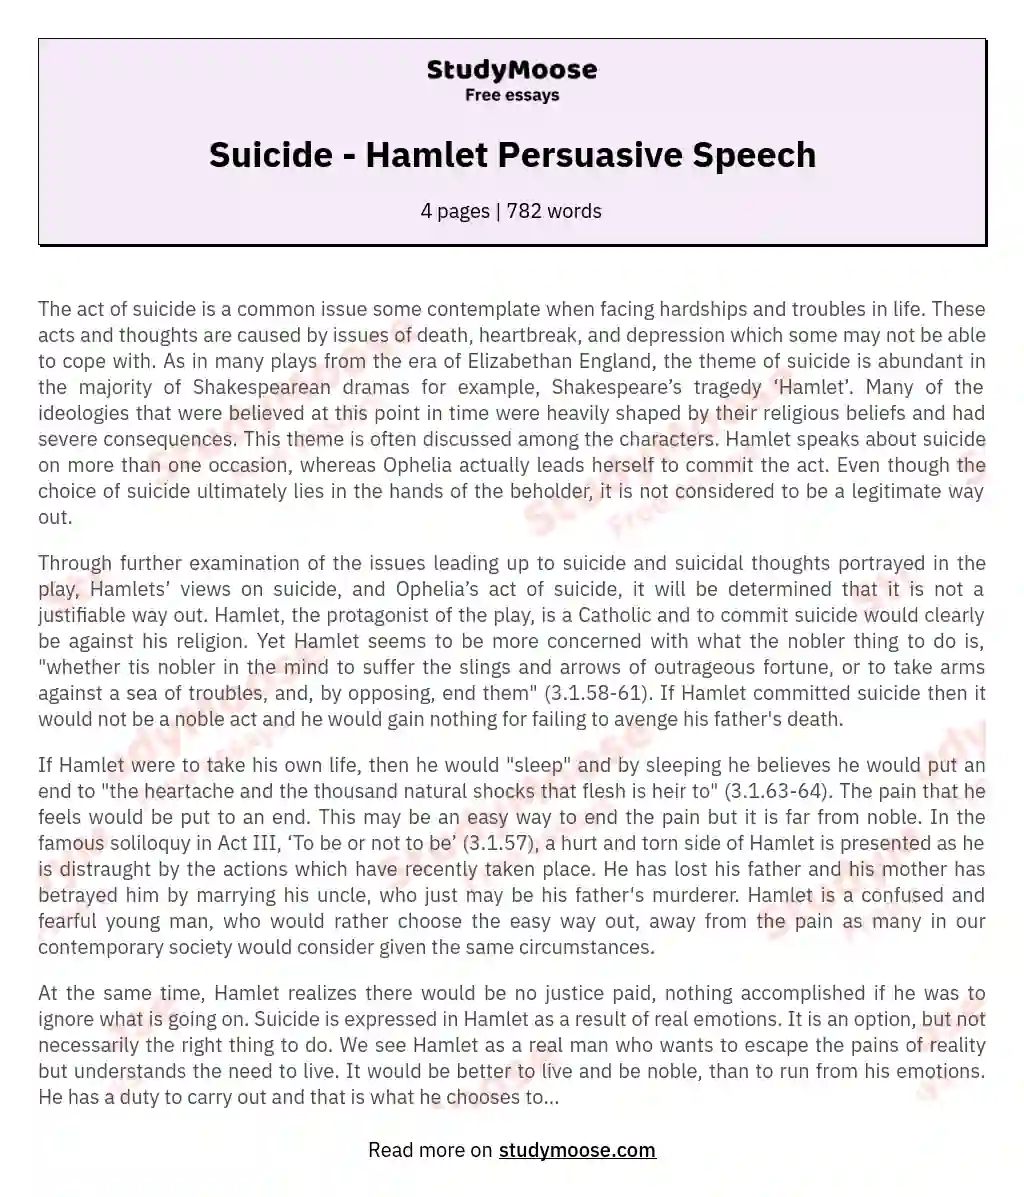 Suicide - Hamlet Persuasive Speech essay